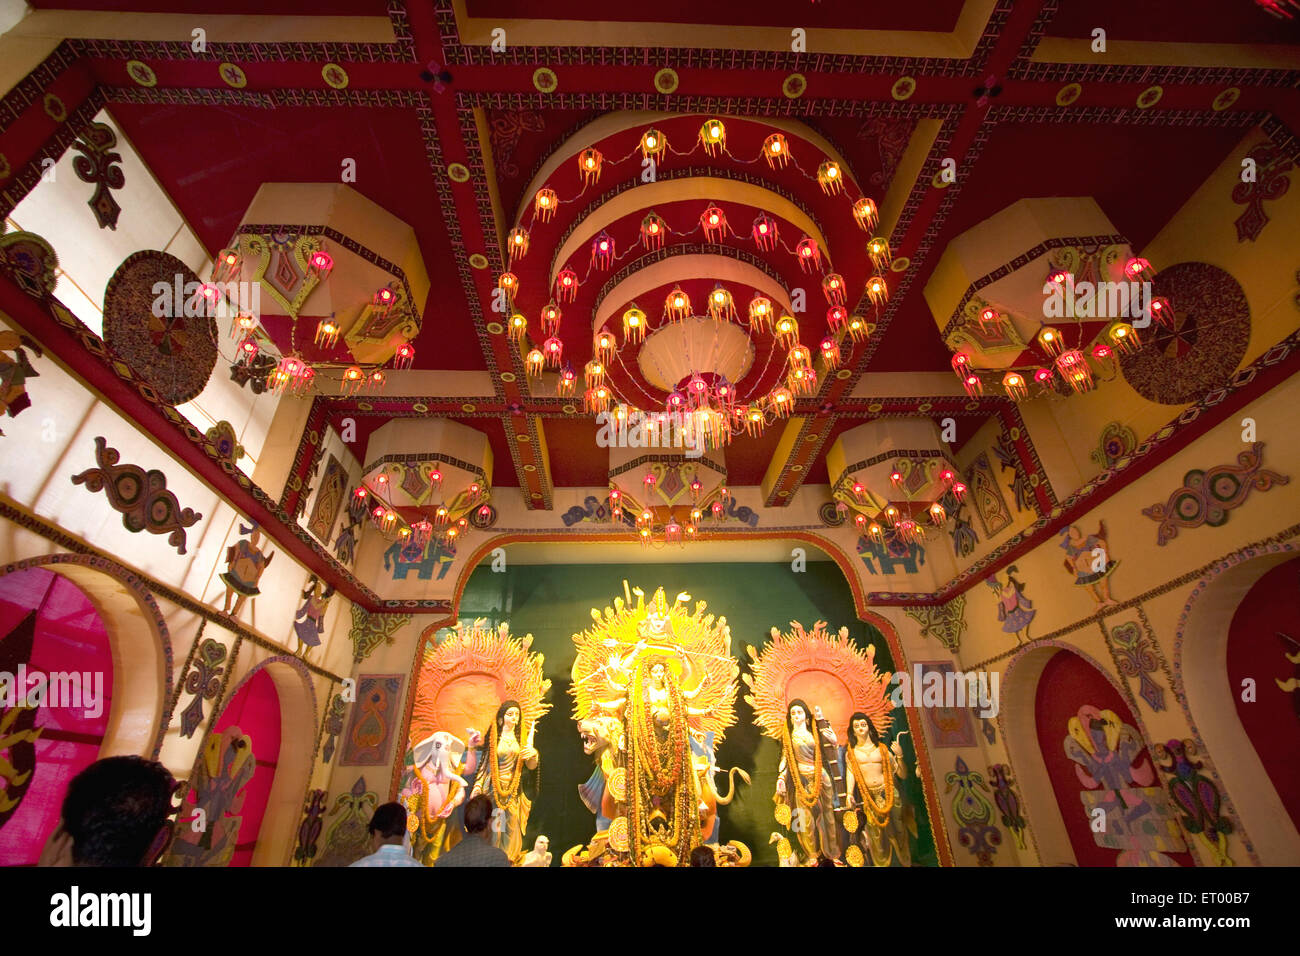 Decorated Mandap And Idols Of Goddess For Durga Puja